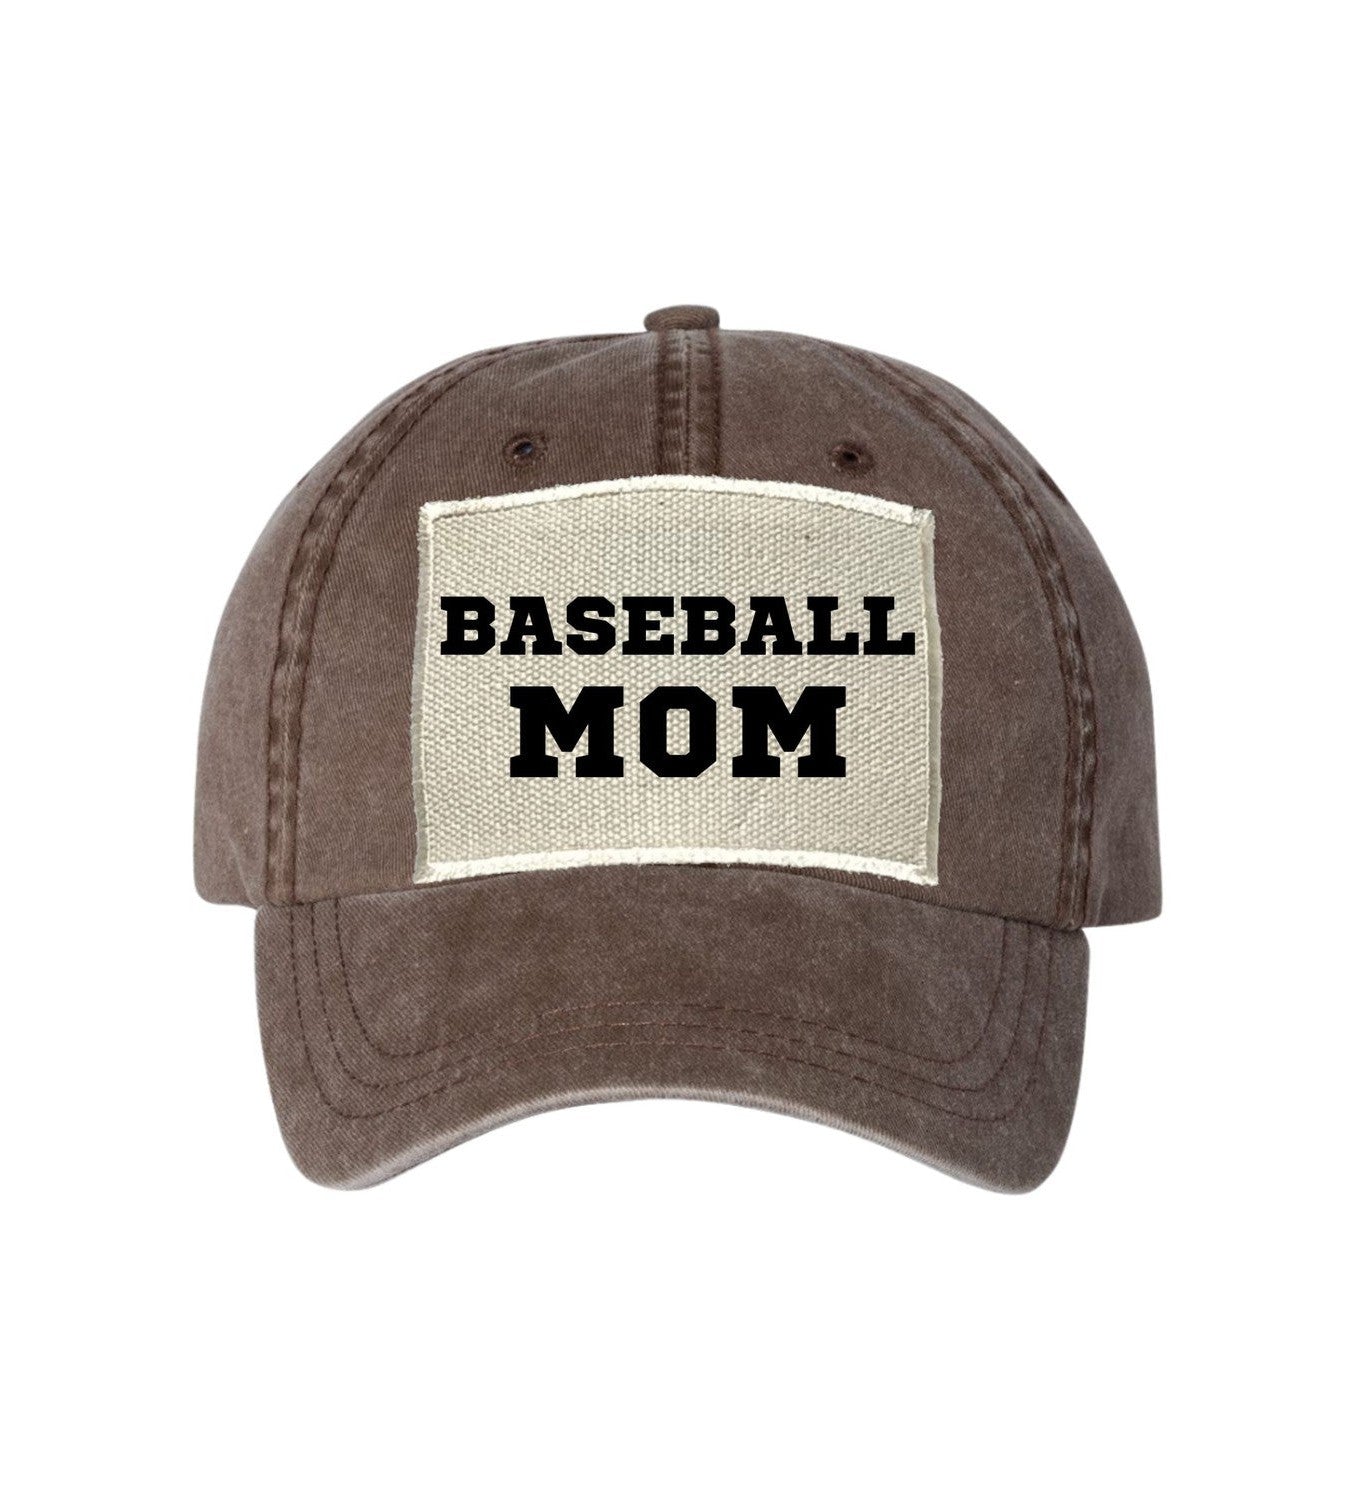 Basketball Mom Ball Cap